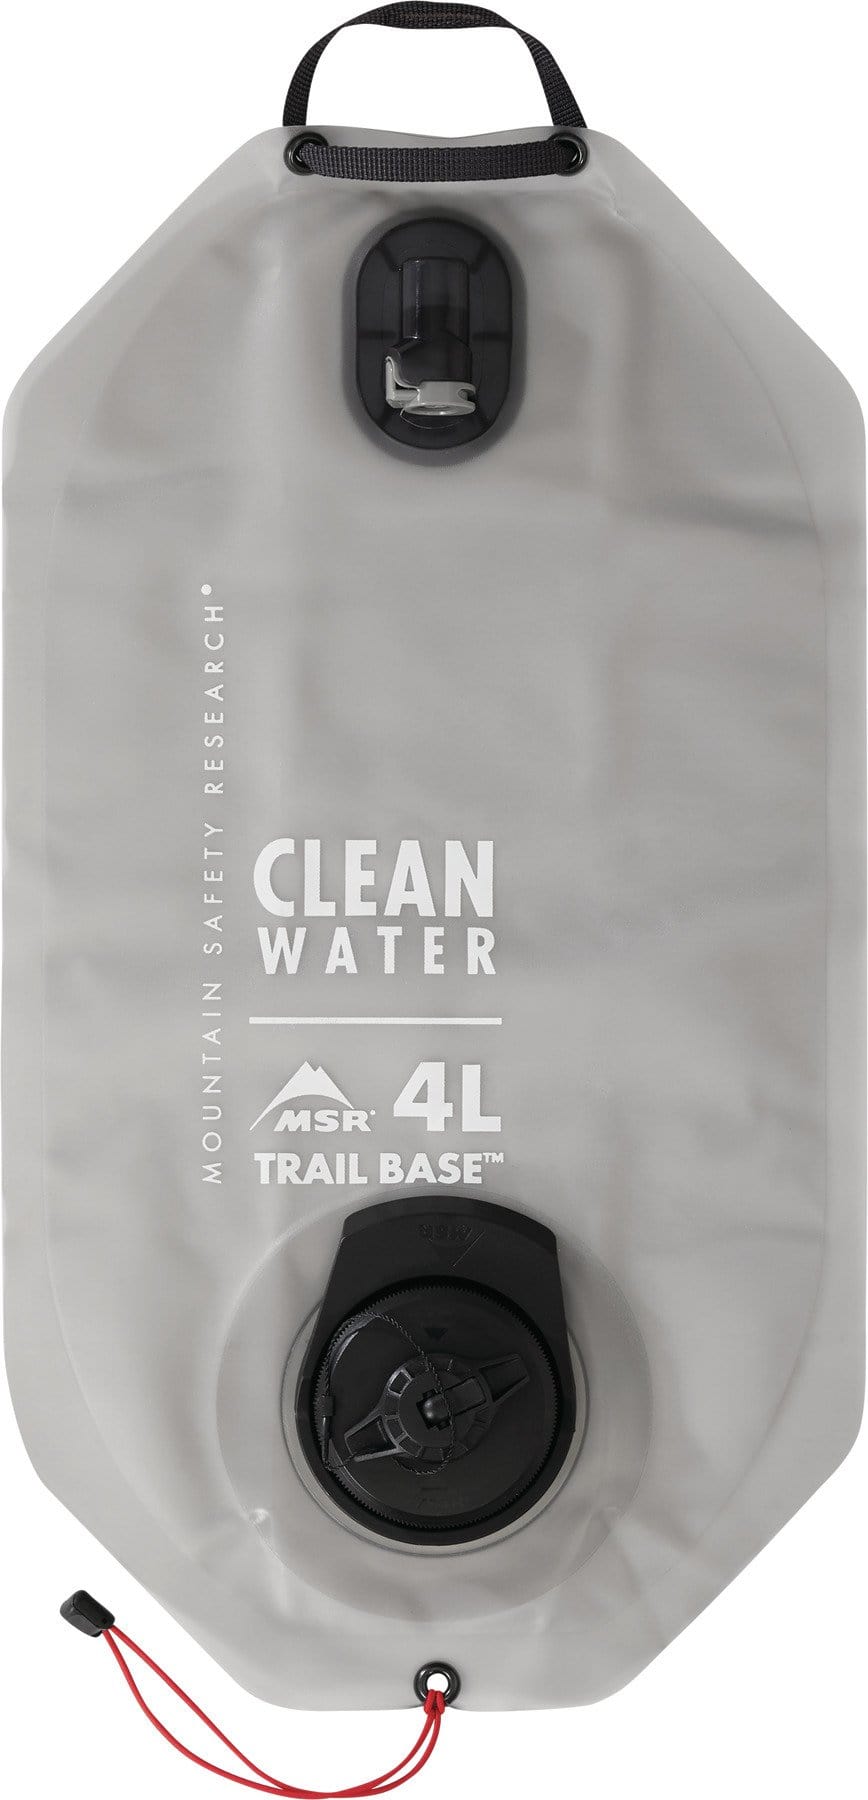 MSR Trail Base 4L Water Filter Kit